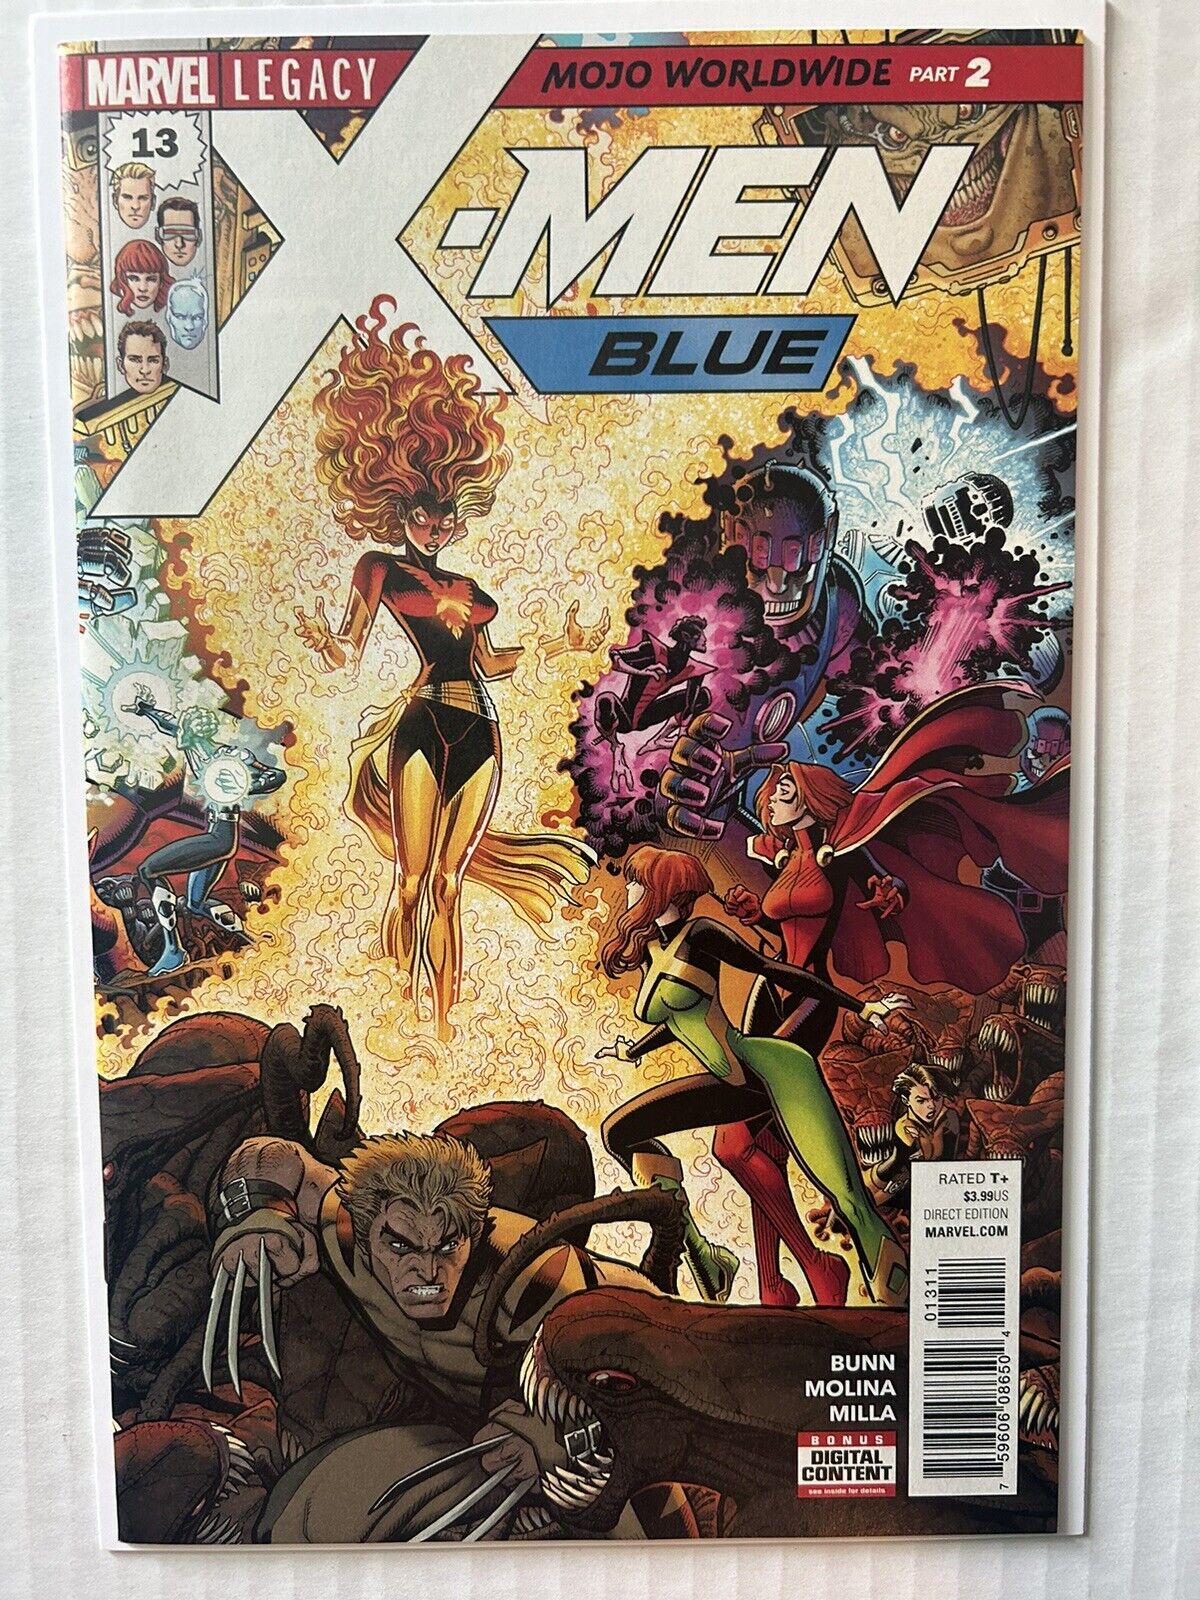 X-MEN: BLUE #13 - ARTHUR ADAMS COVER - MARVEL LEGACY - MARVEL COMICS/2017